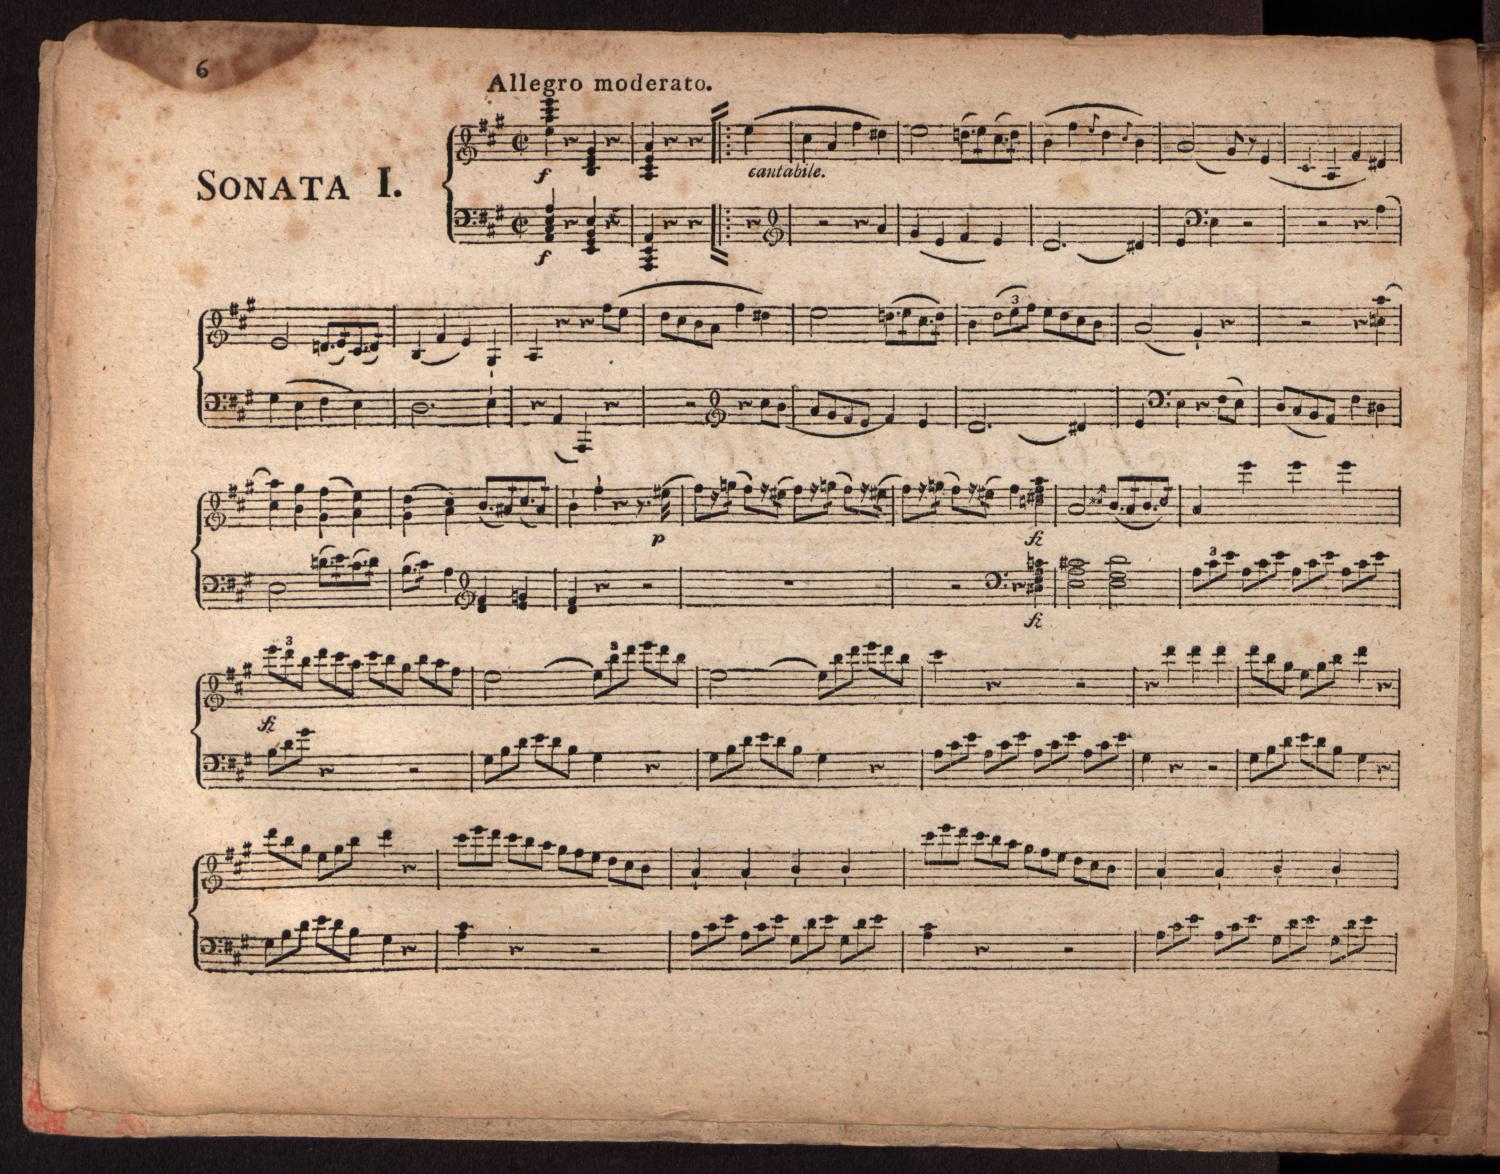 Oeuvres de J. Haydn, Cahier VII contenant VI Sonates pour le Pianoforte
                                                
                                                    6
                                                